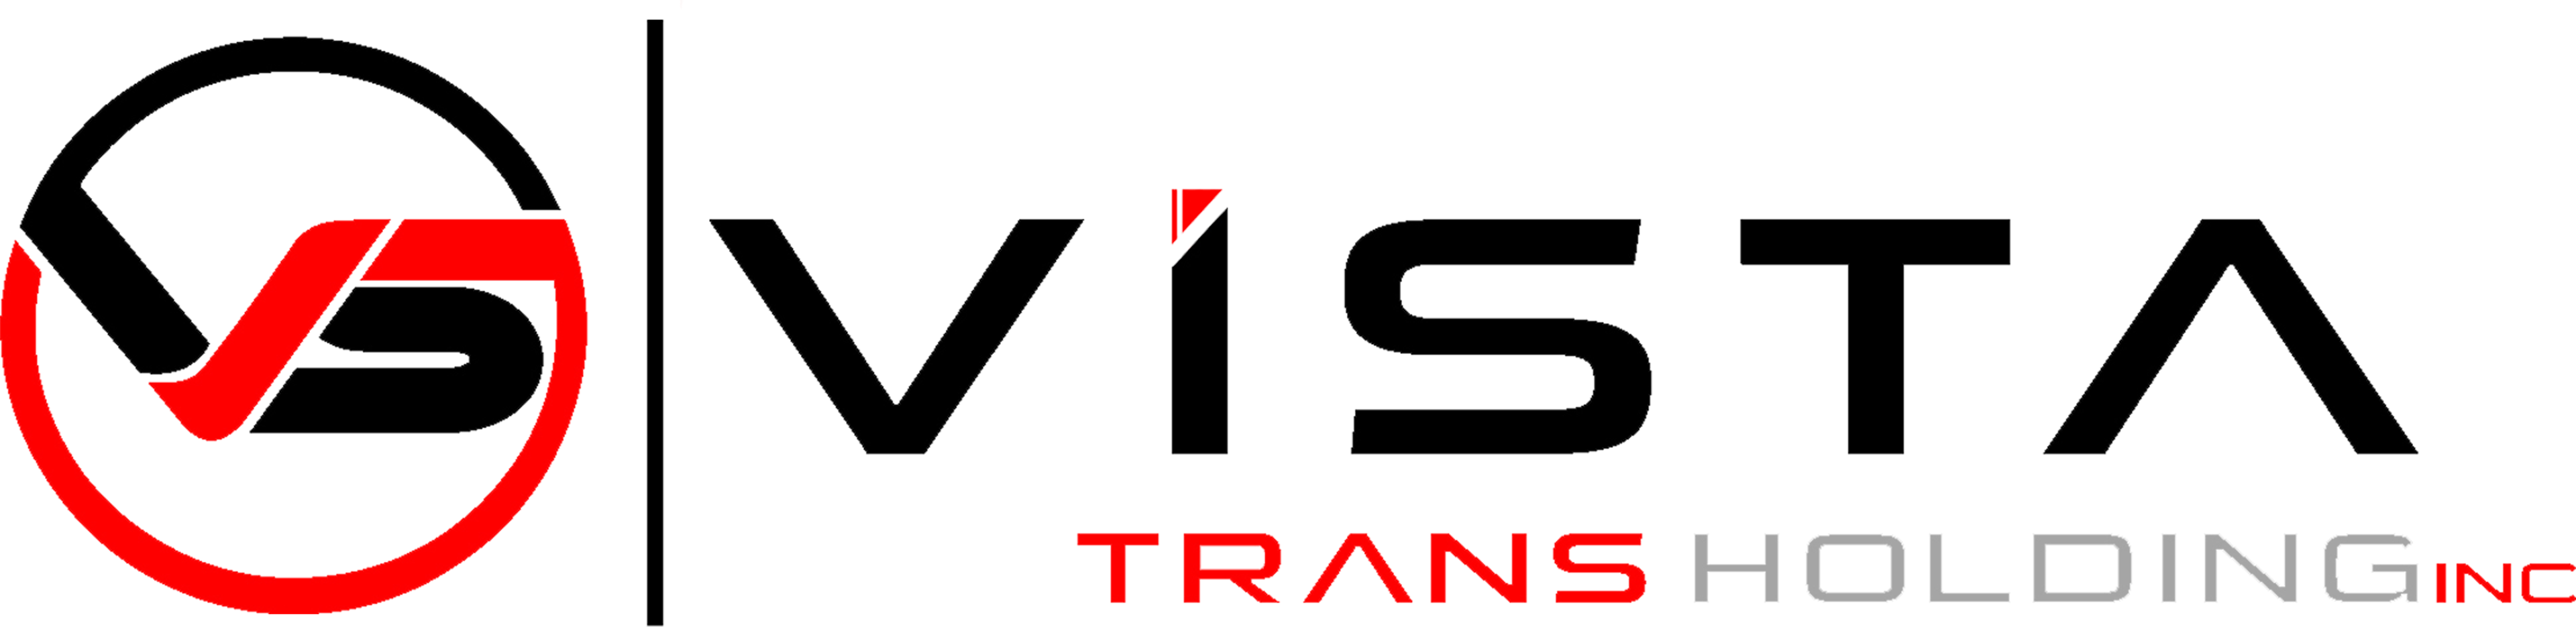 Logo for Vista Trans Holding